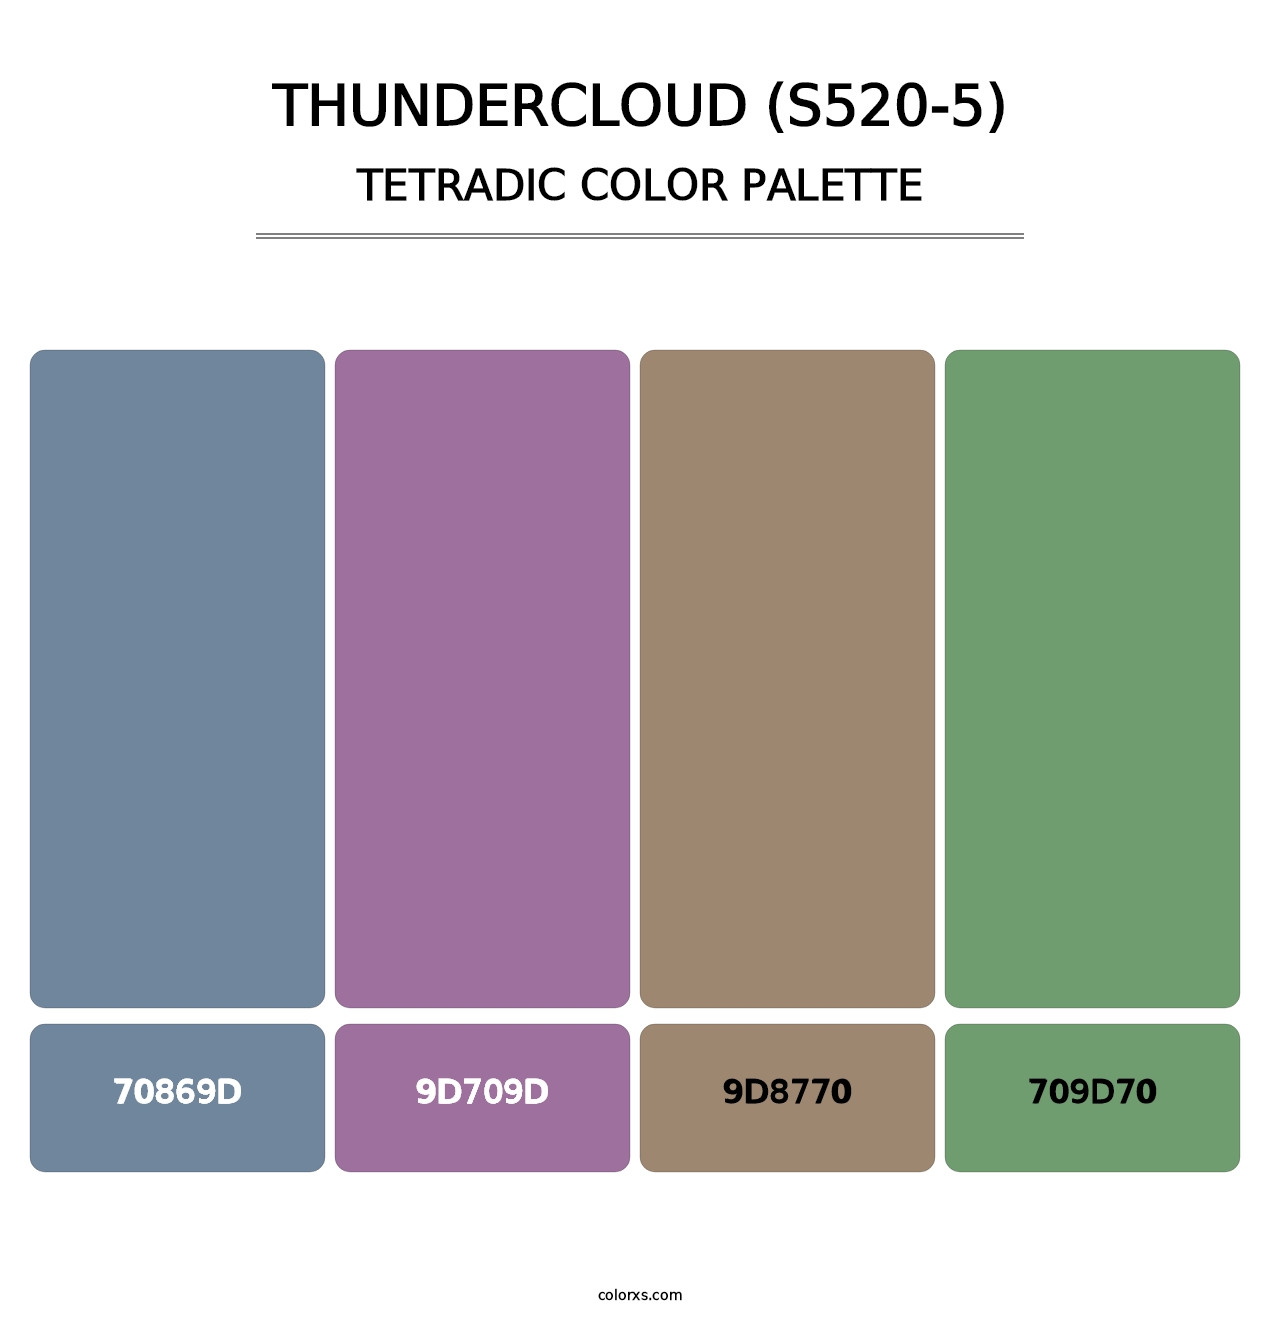 Thundercloud (S520-5) - Tetradic Color Palette